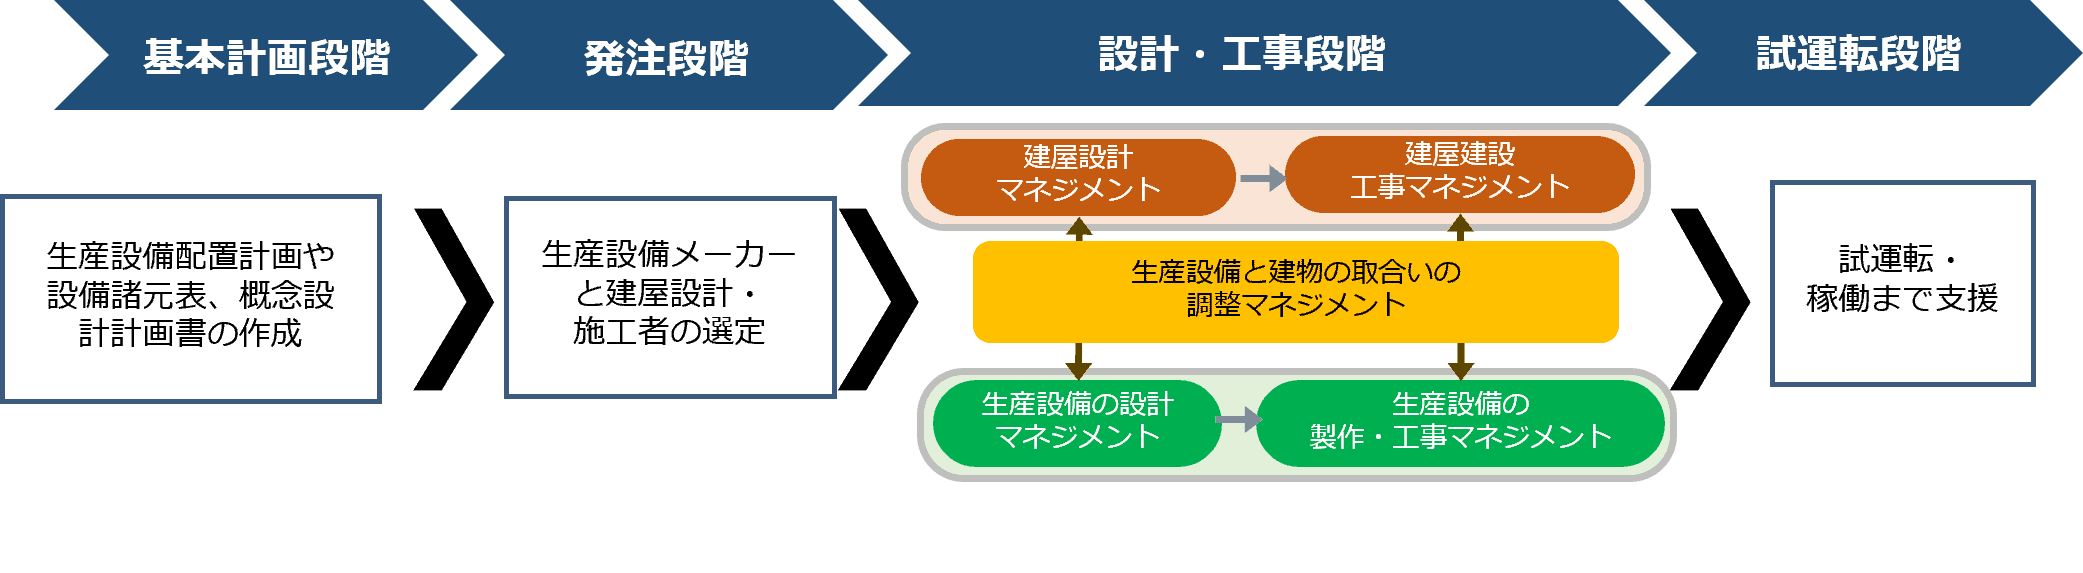 engineering-management-workflow-2-jp